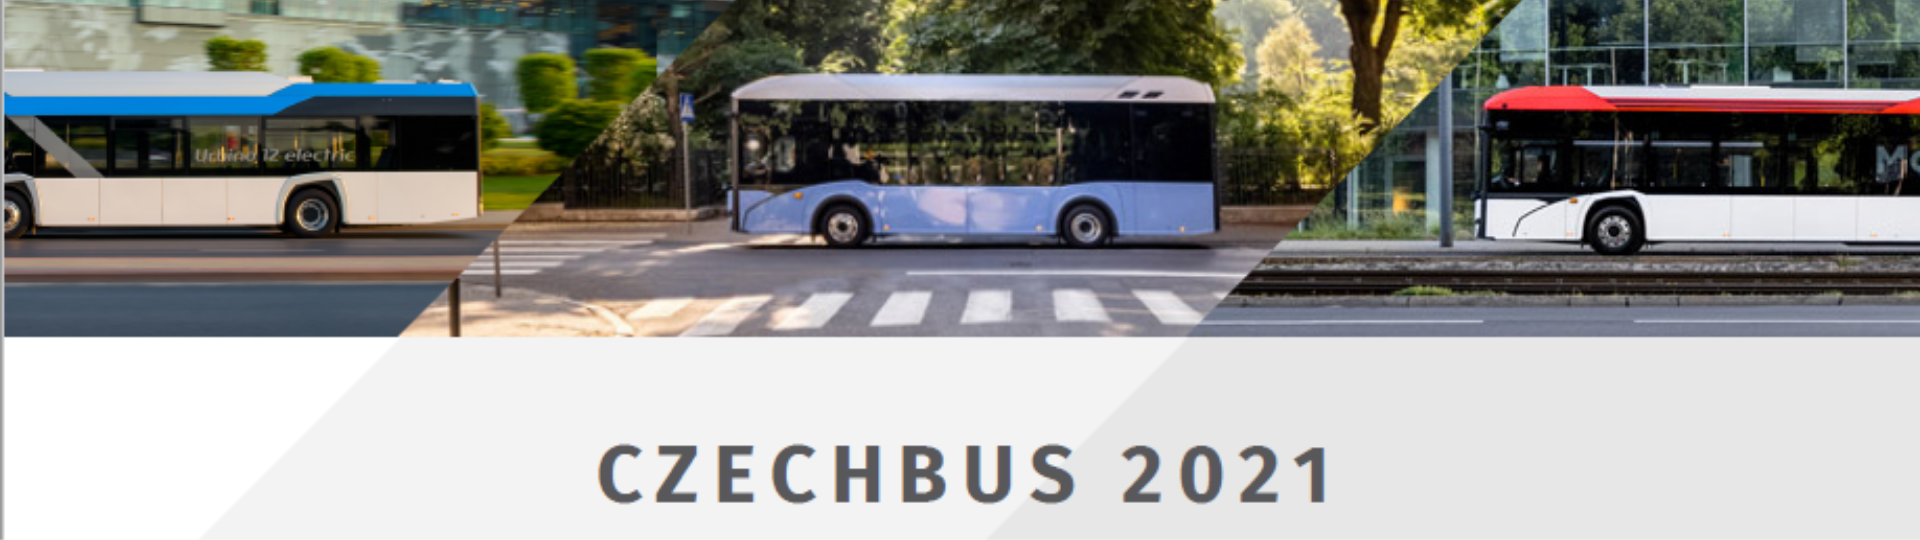 CZECHBUS 2021 invitation